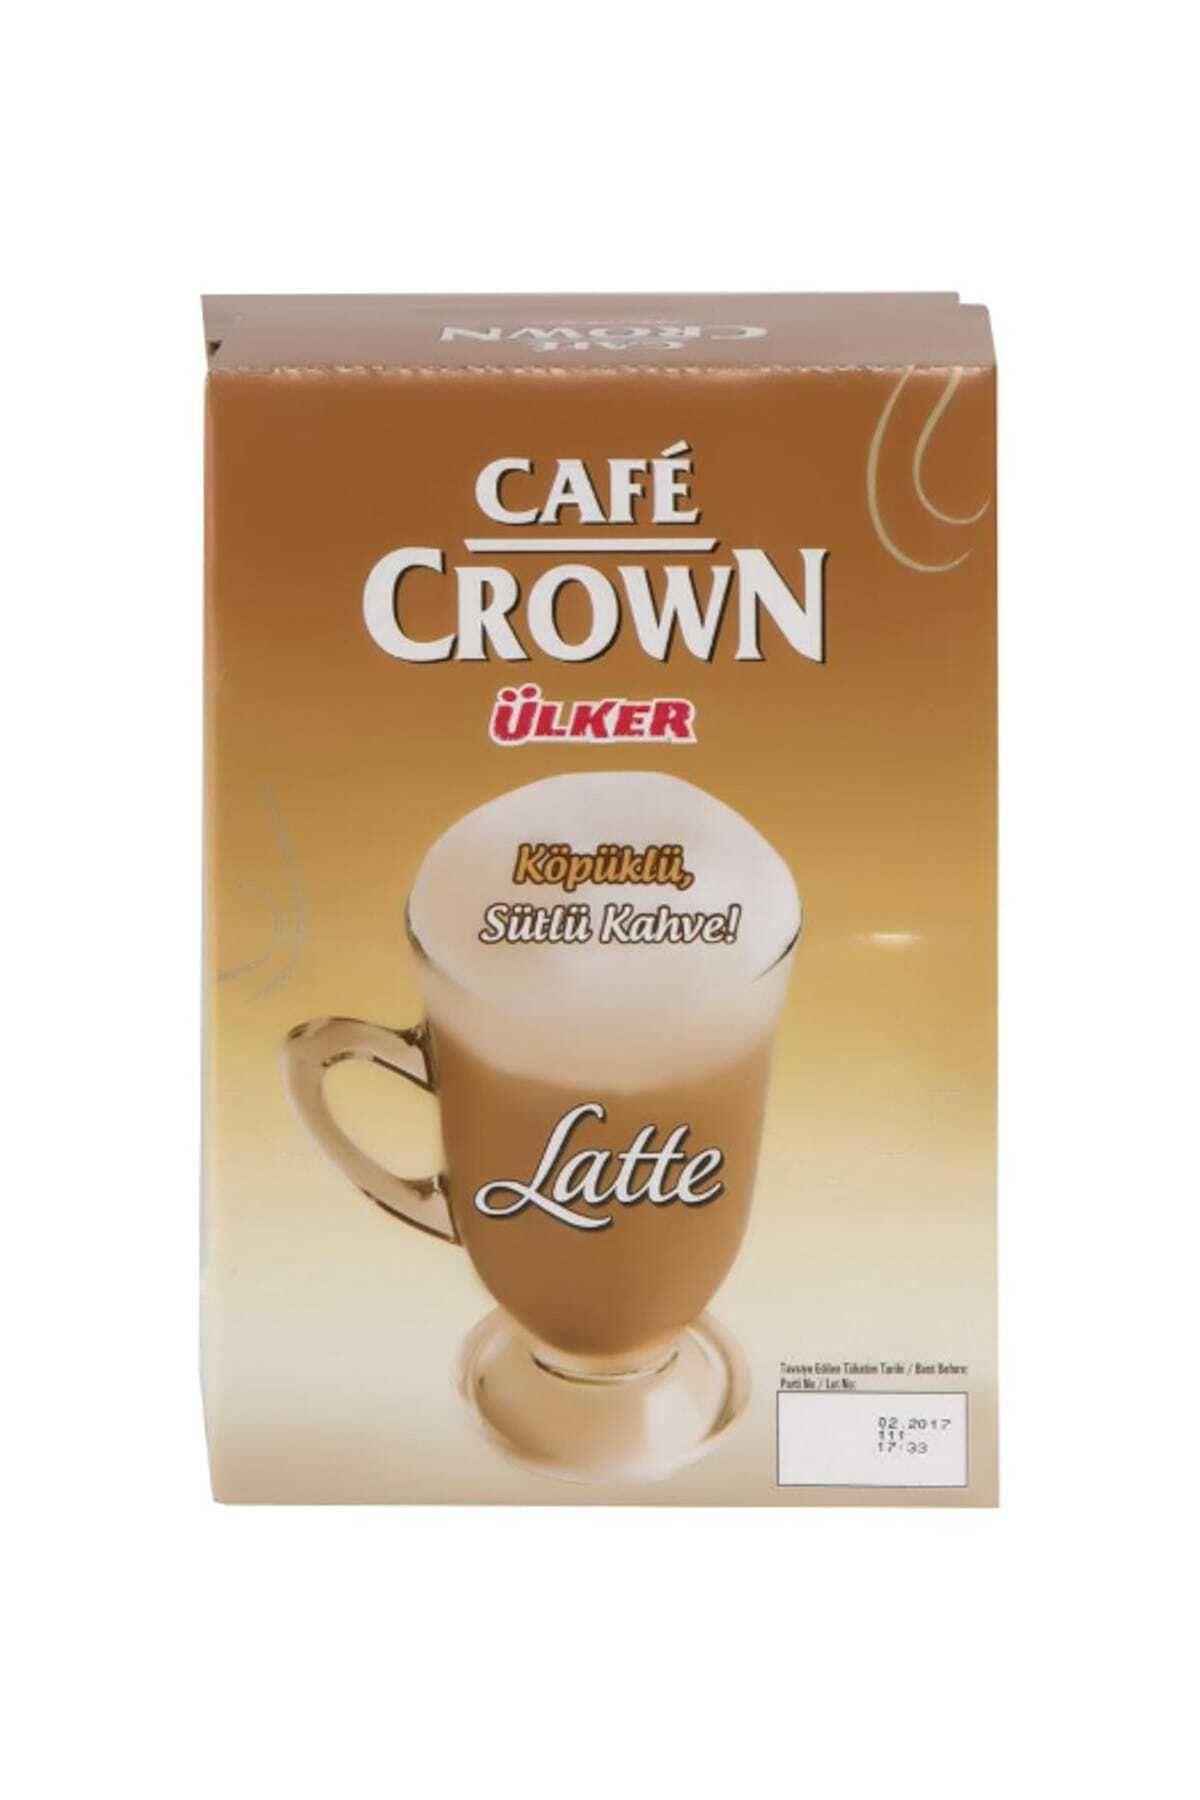 Ülker Cafe Crown Latte Köpüklü Sütlü Kahve 17 Gr - 24 Adet